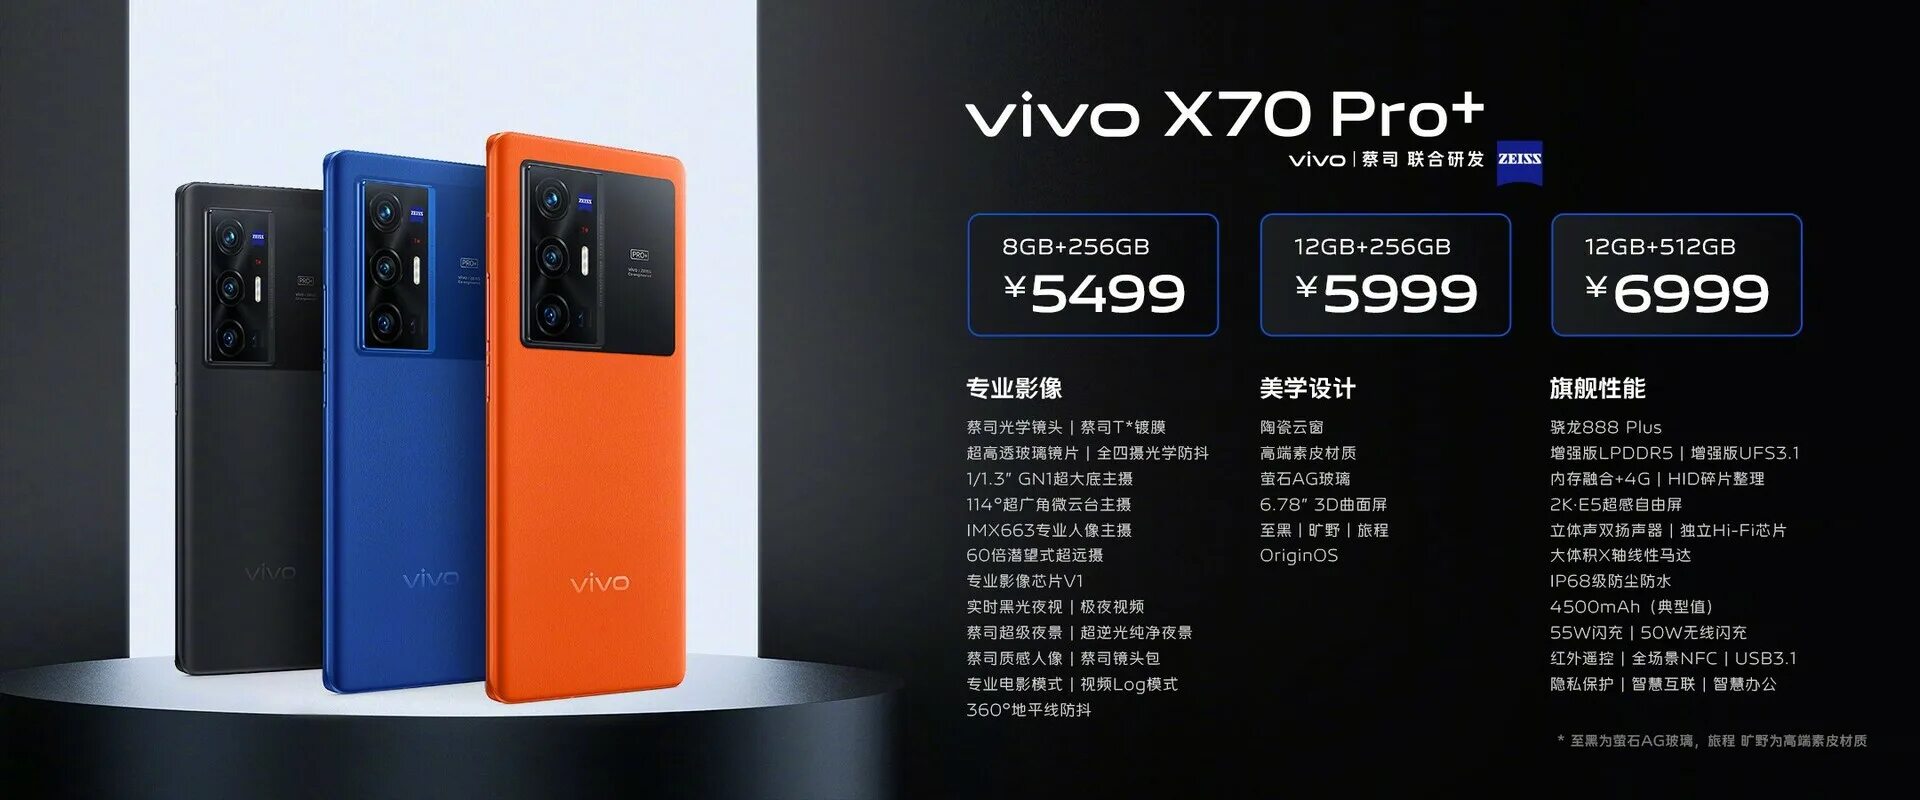 X70pro+. X70 Pro Plus. Vivo x70 Pro Plus характеристики. X70 Pro. Сравнение vivo x100 и vivo x100 pro